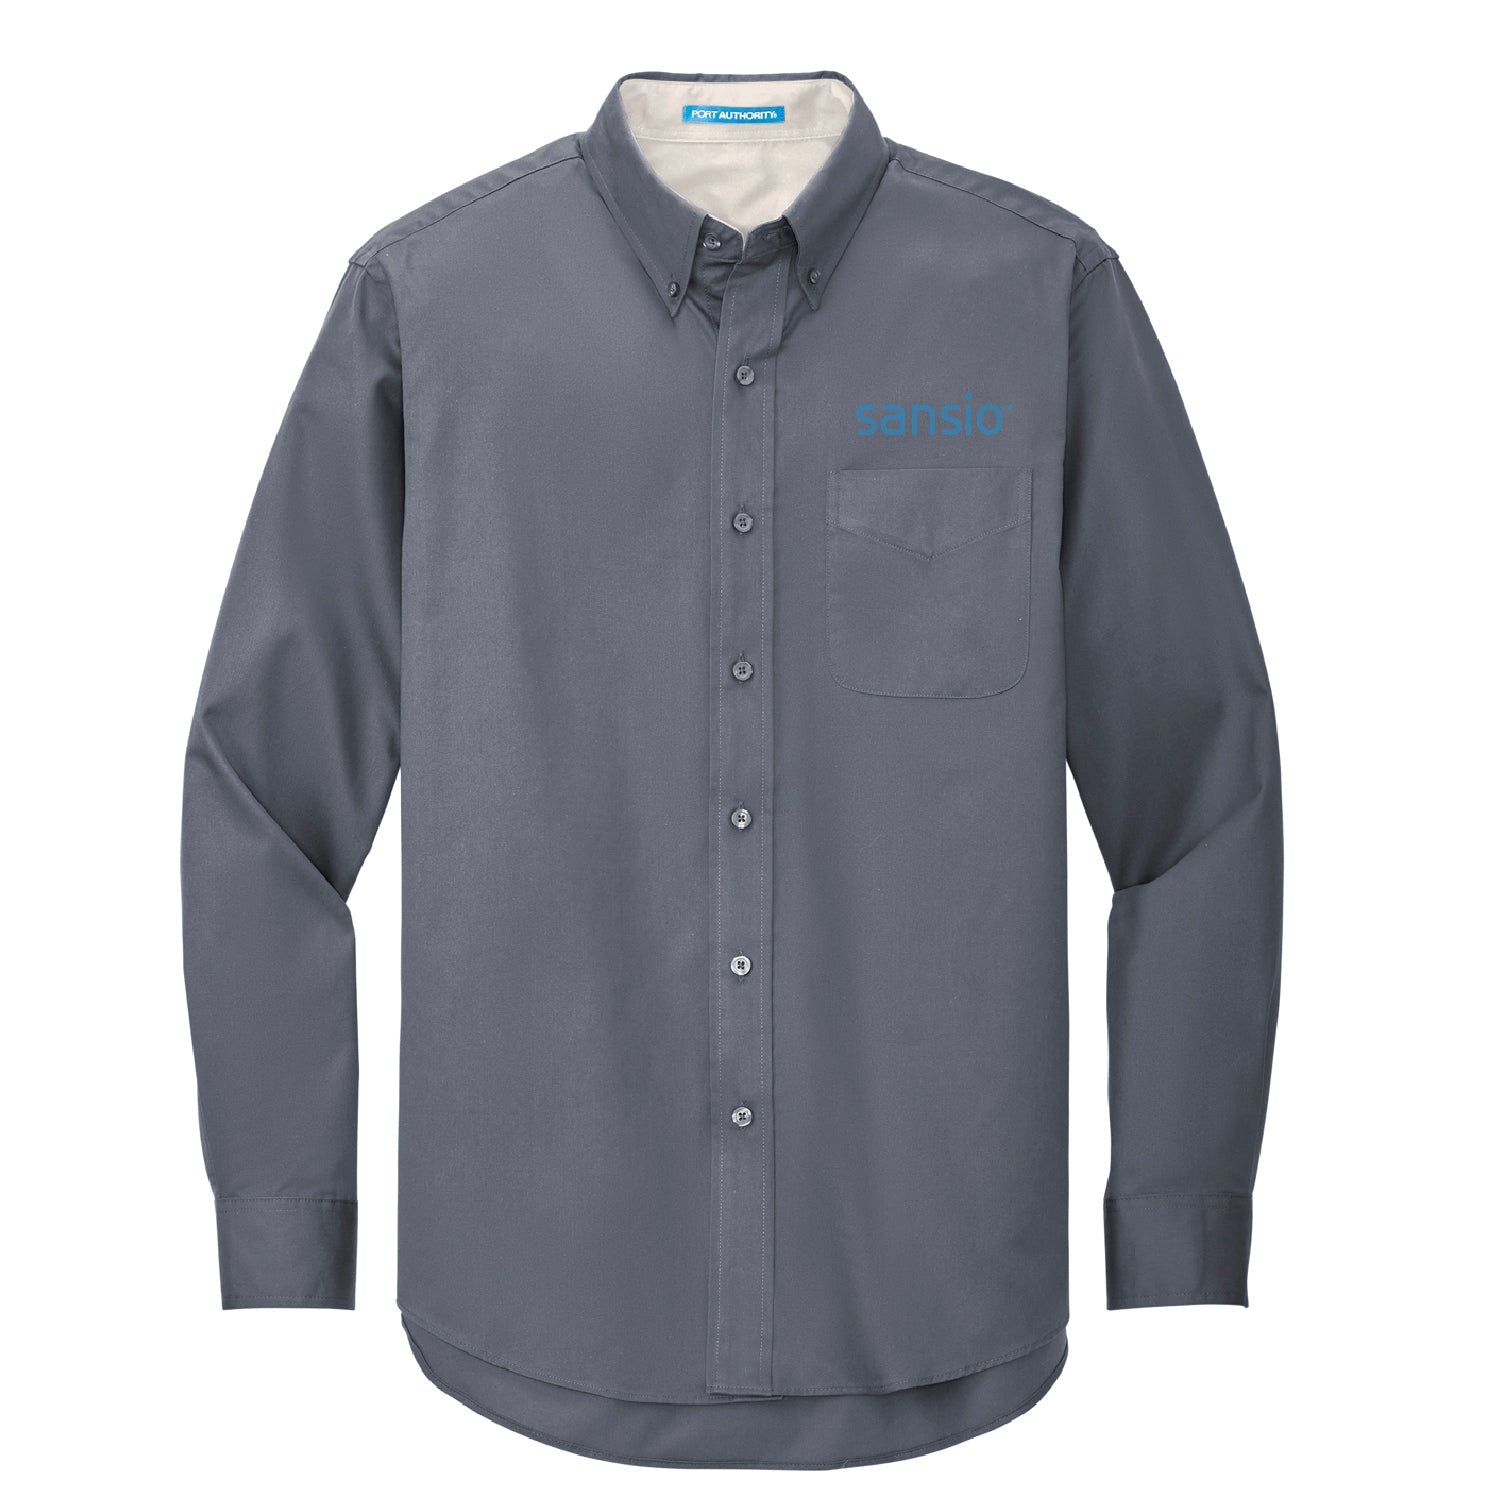 Sansio Long Sleeve Easy Care Shirt - DSP On Demand